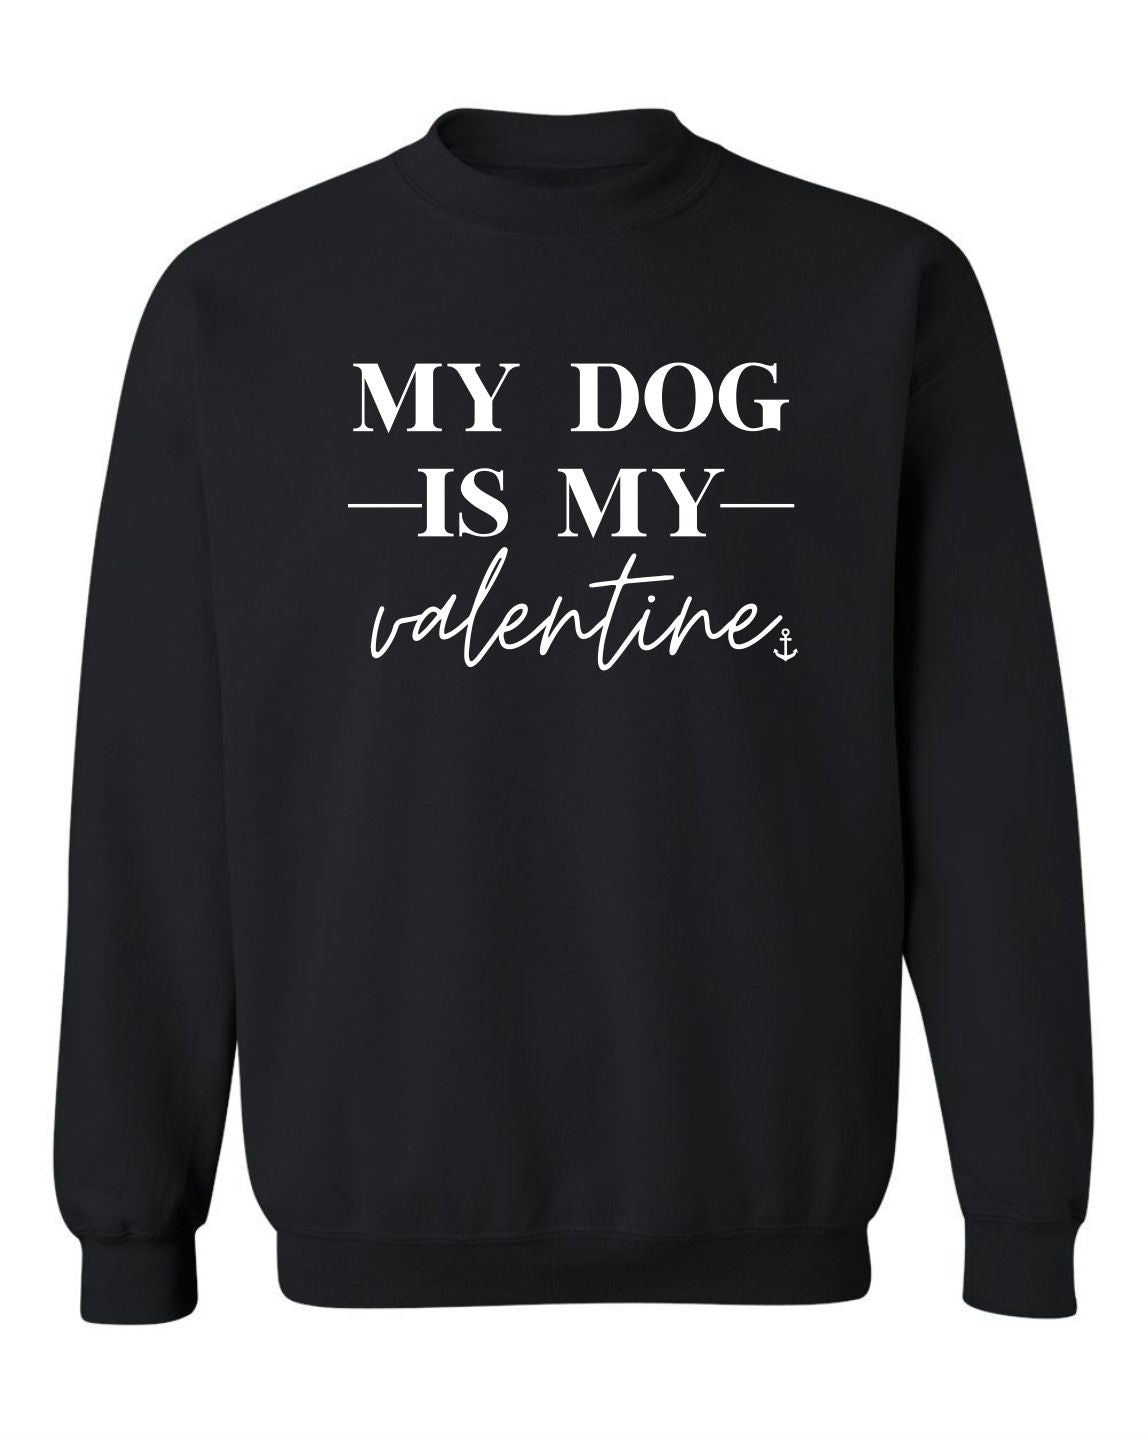 "My Dog Is My Valentine" Unisex Crewneck Sweatshirt